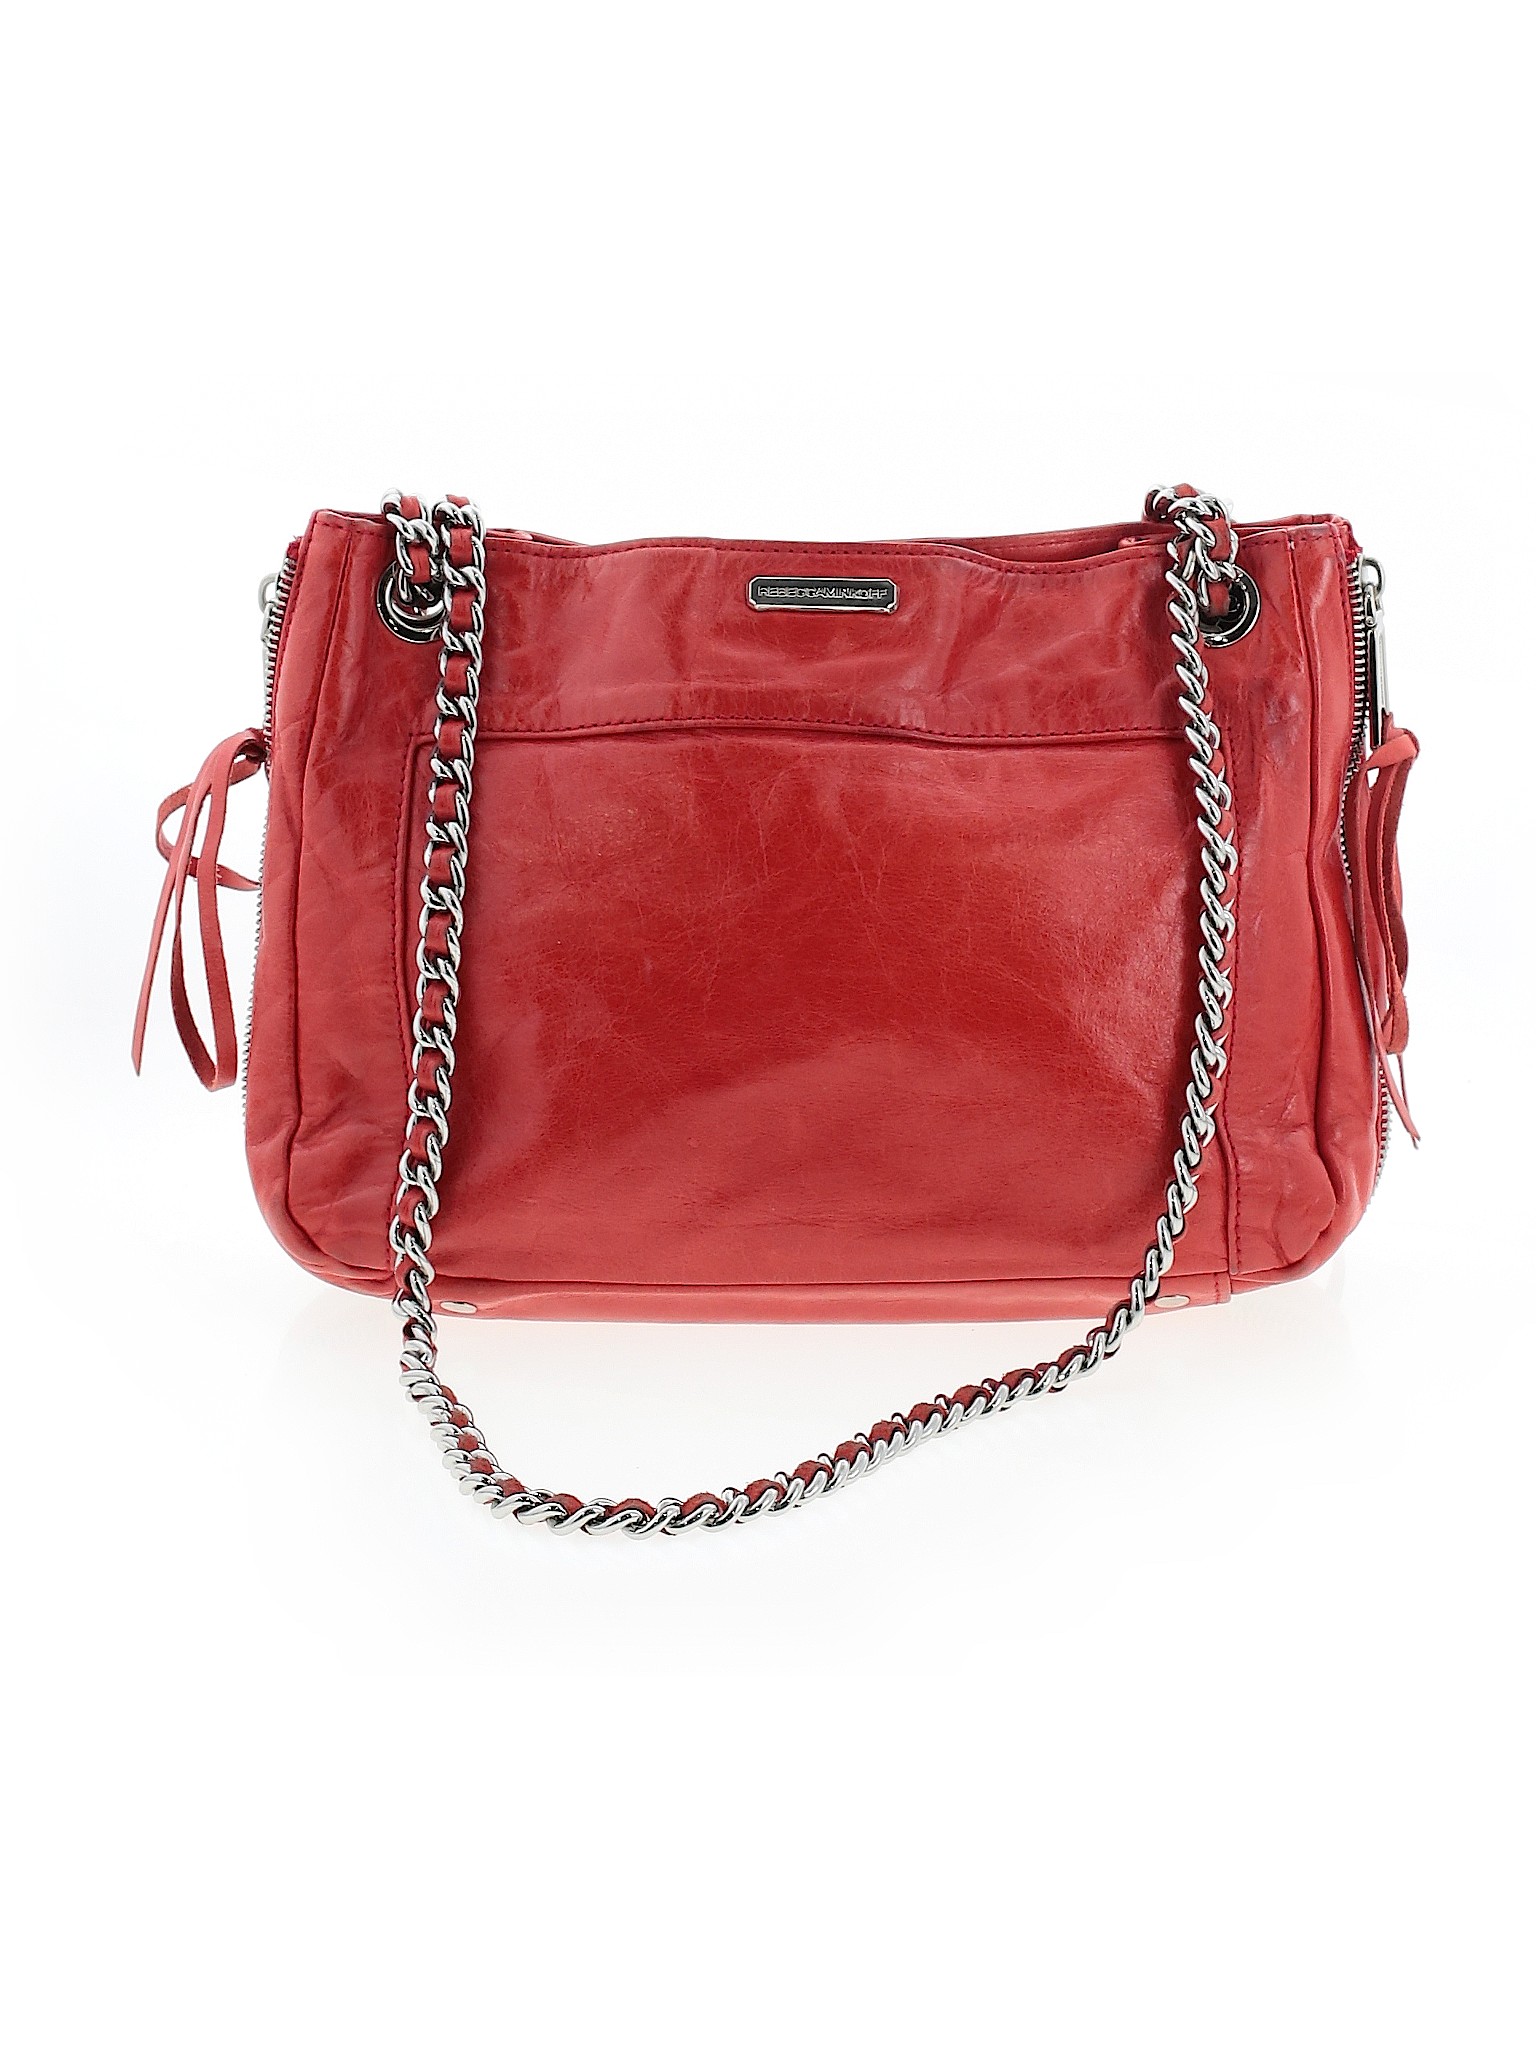 Rebecca Minkoff Women Red Leather Shoulder Bag One Size | eBay